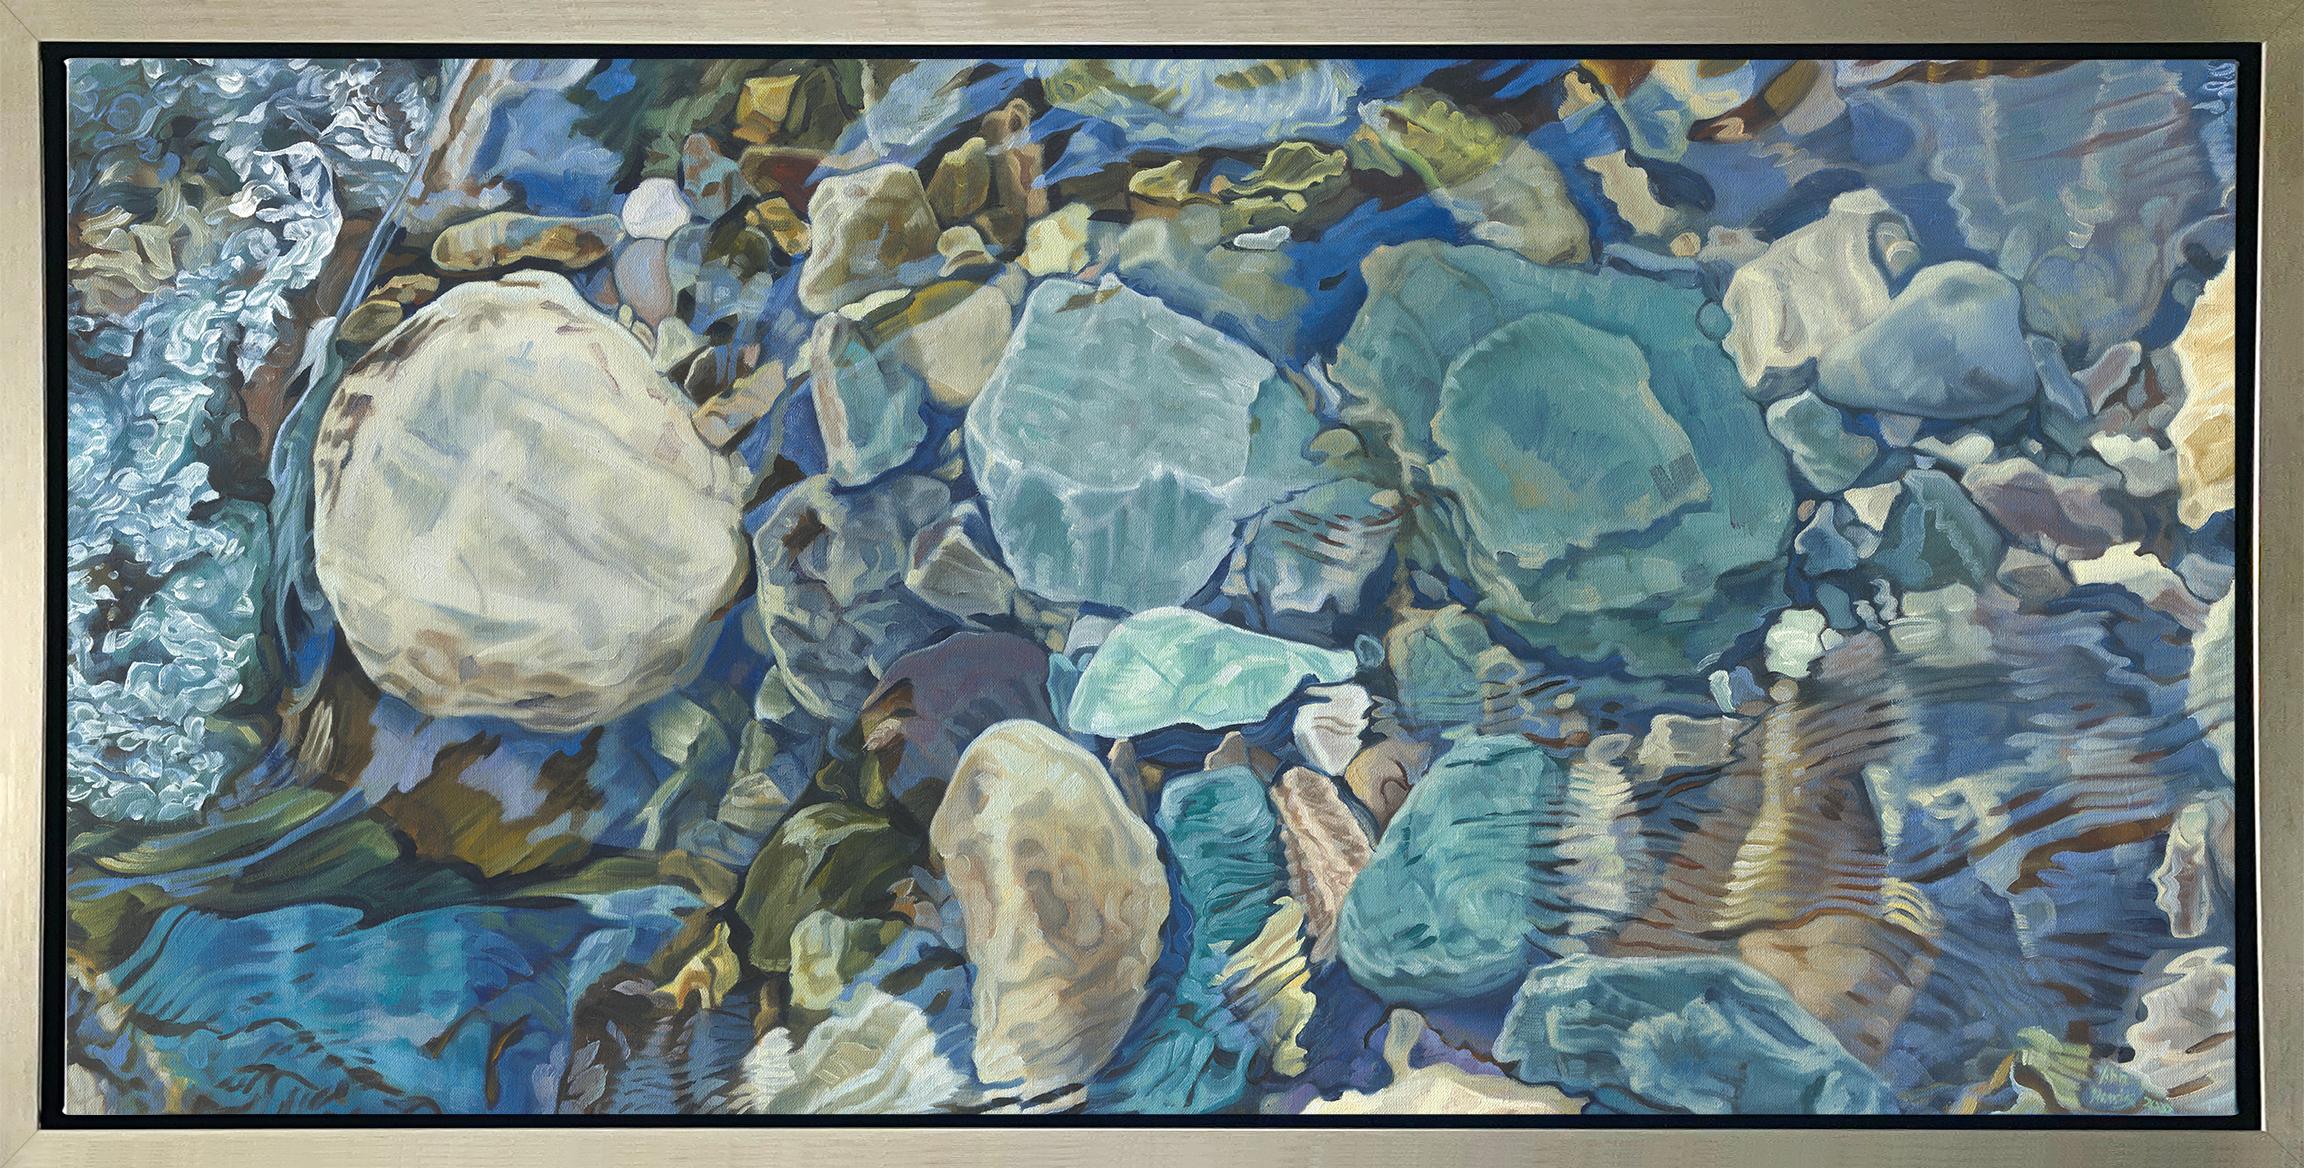 John Harris (painter) Landscape Print - "Rocky River 8" Framed Limited Edition Giclee Print, 30" x 60"